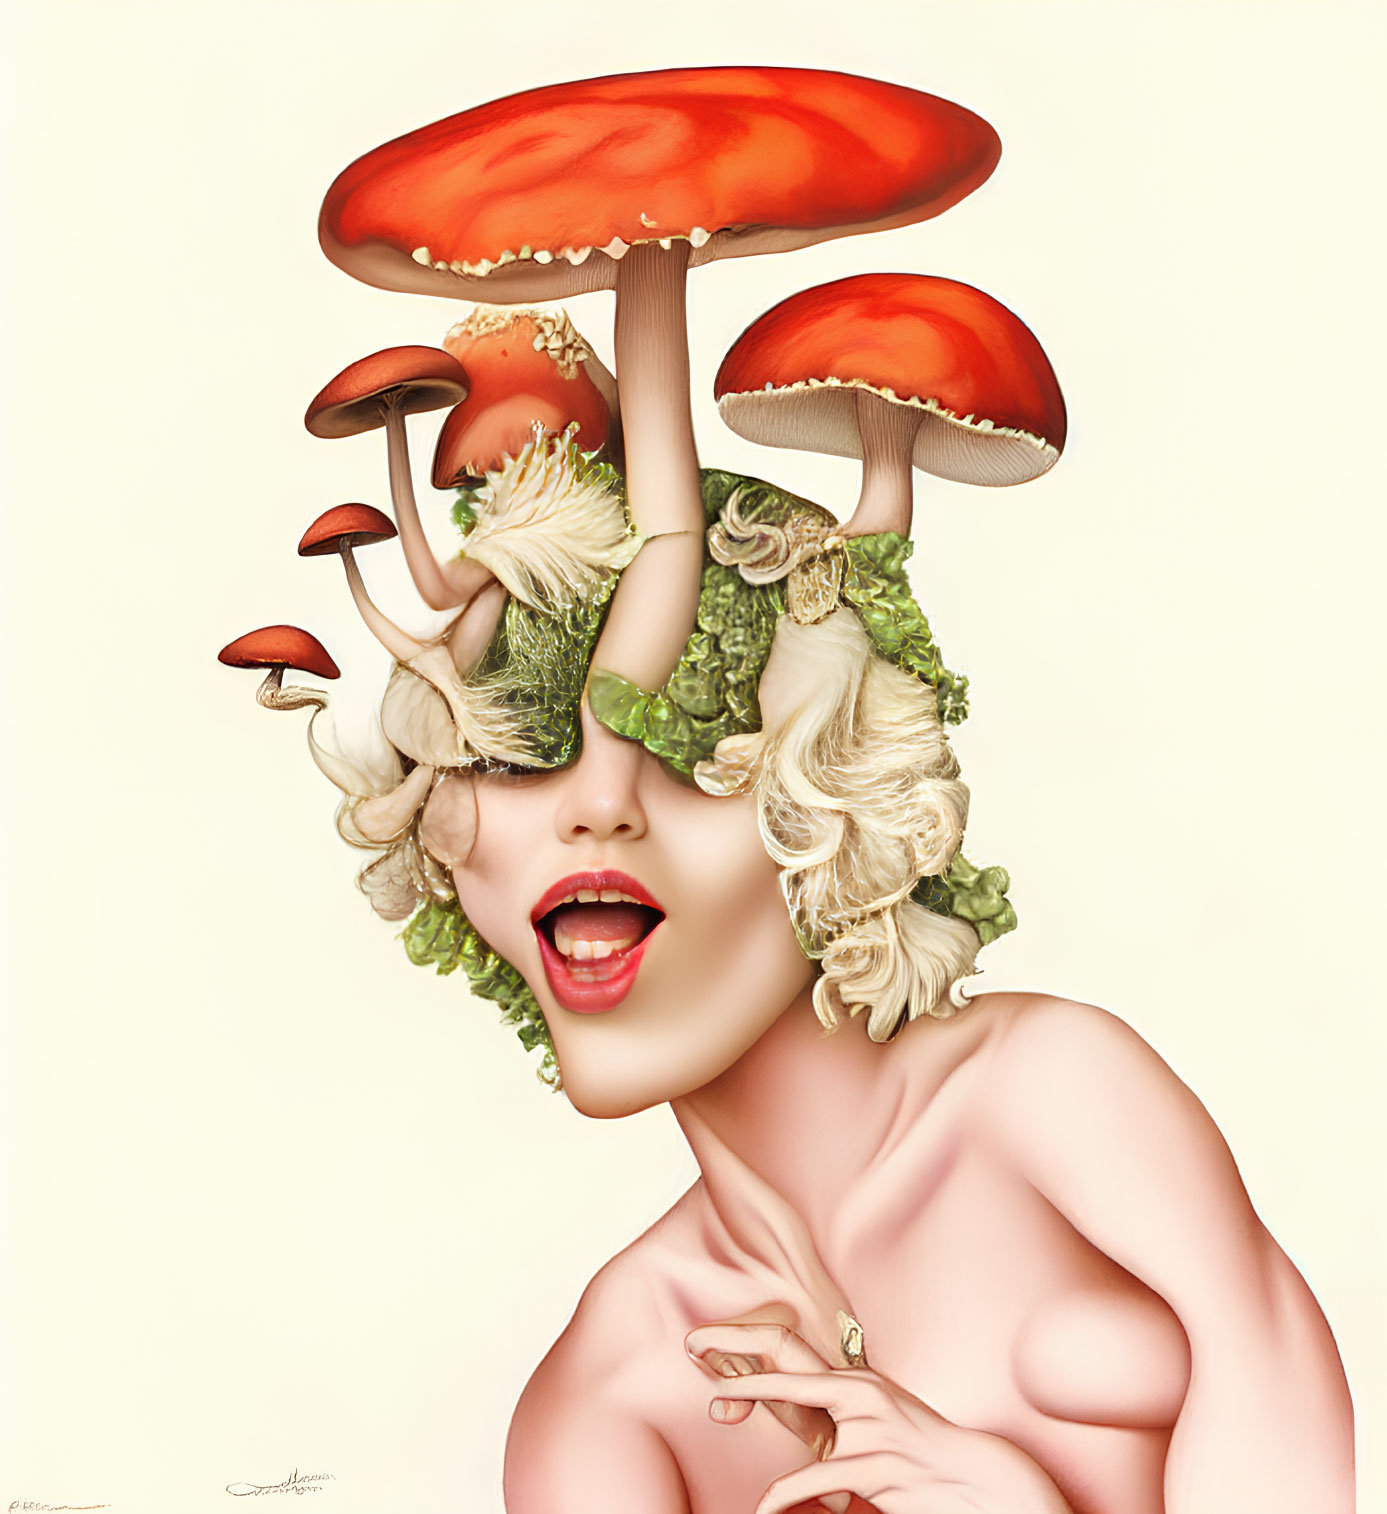 Surreal illustration: person with mushroom and foliage head